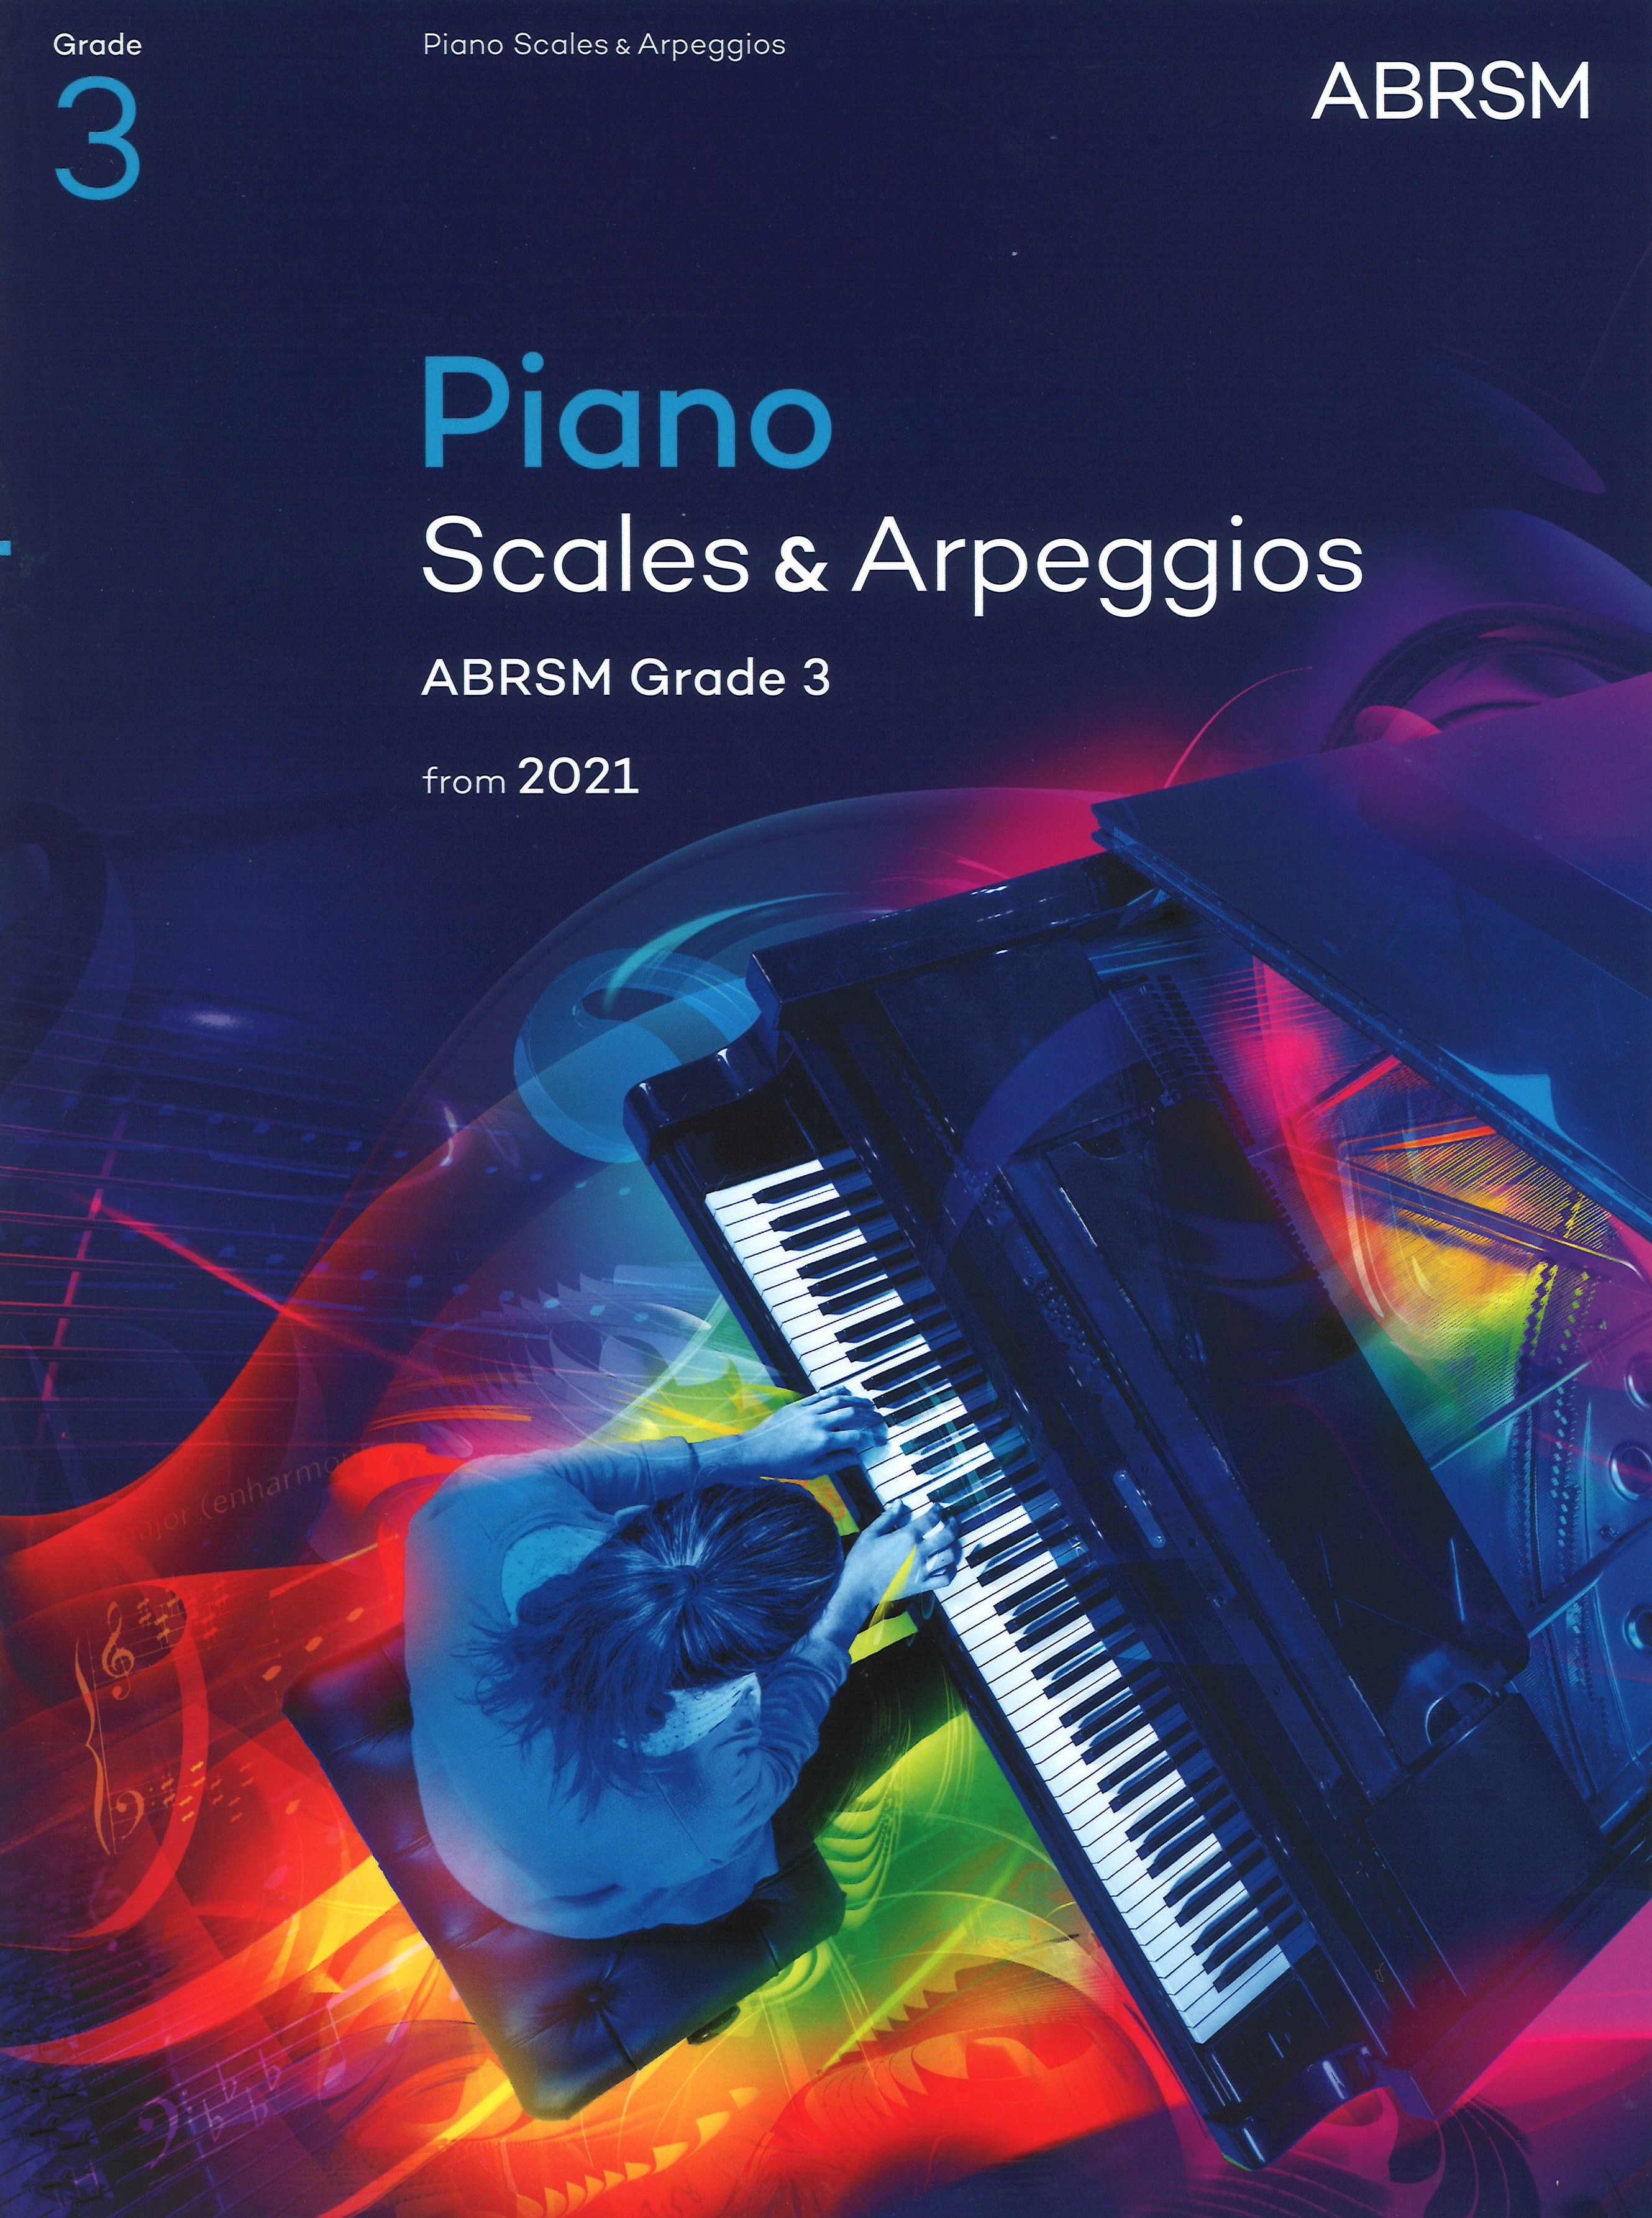 Piano Scales & Arpeggios 2021 Grade 3 Abrsm Sheet Music Songbook